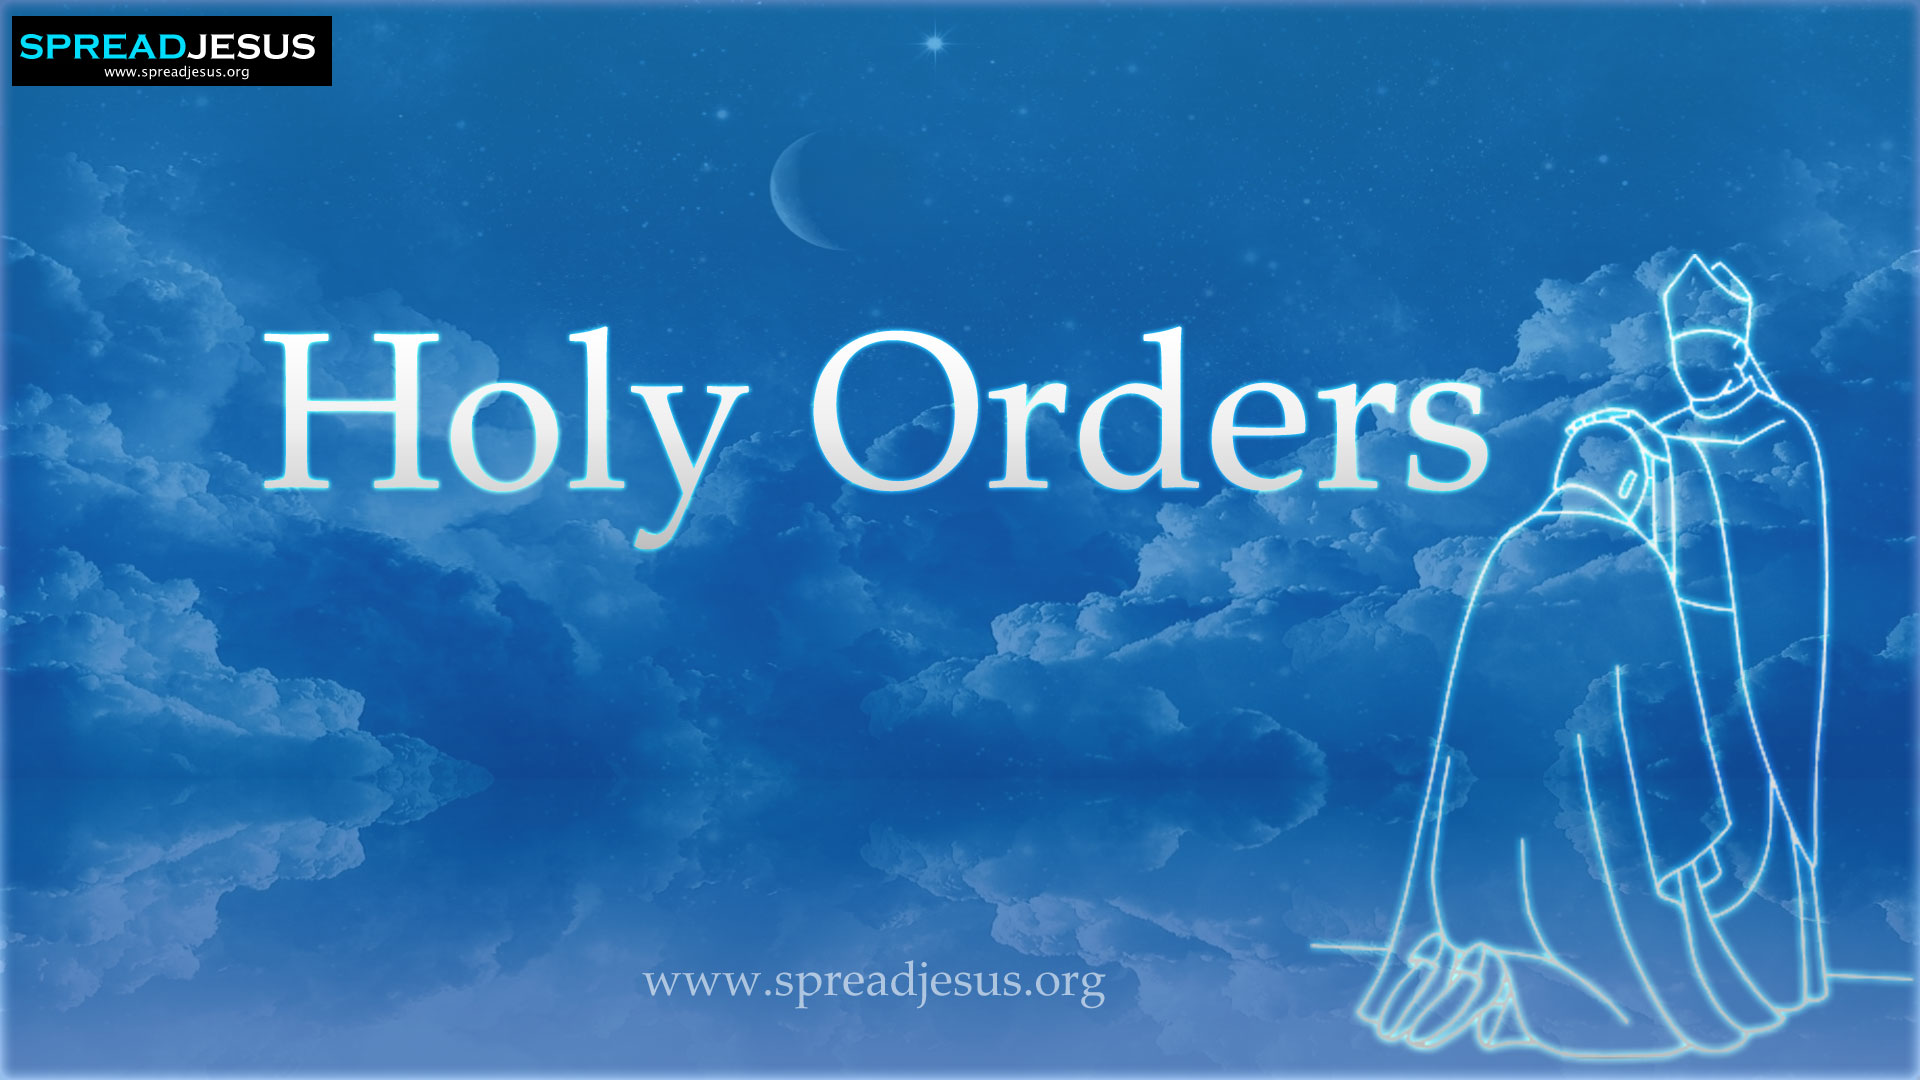 Seven Sacrements Holy Orders Wallpaper HD Catholic Jpg